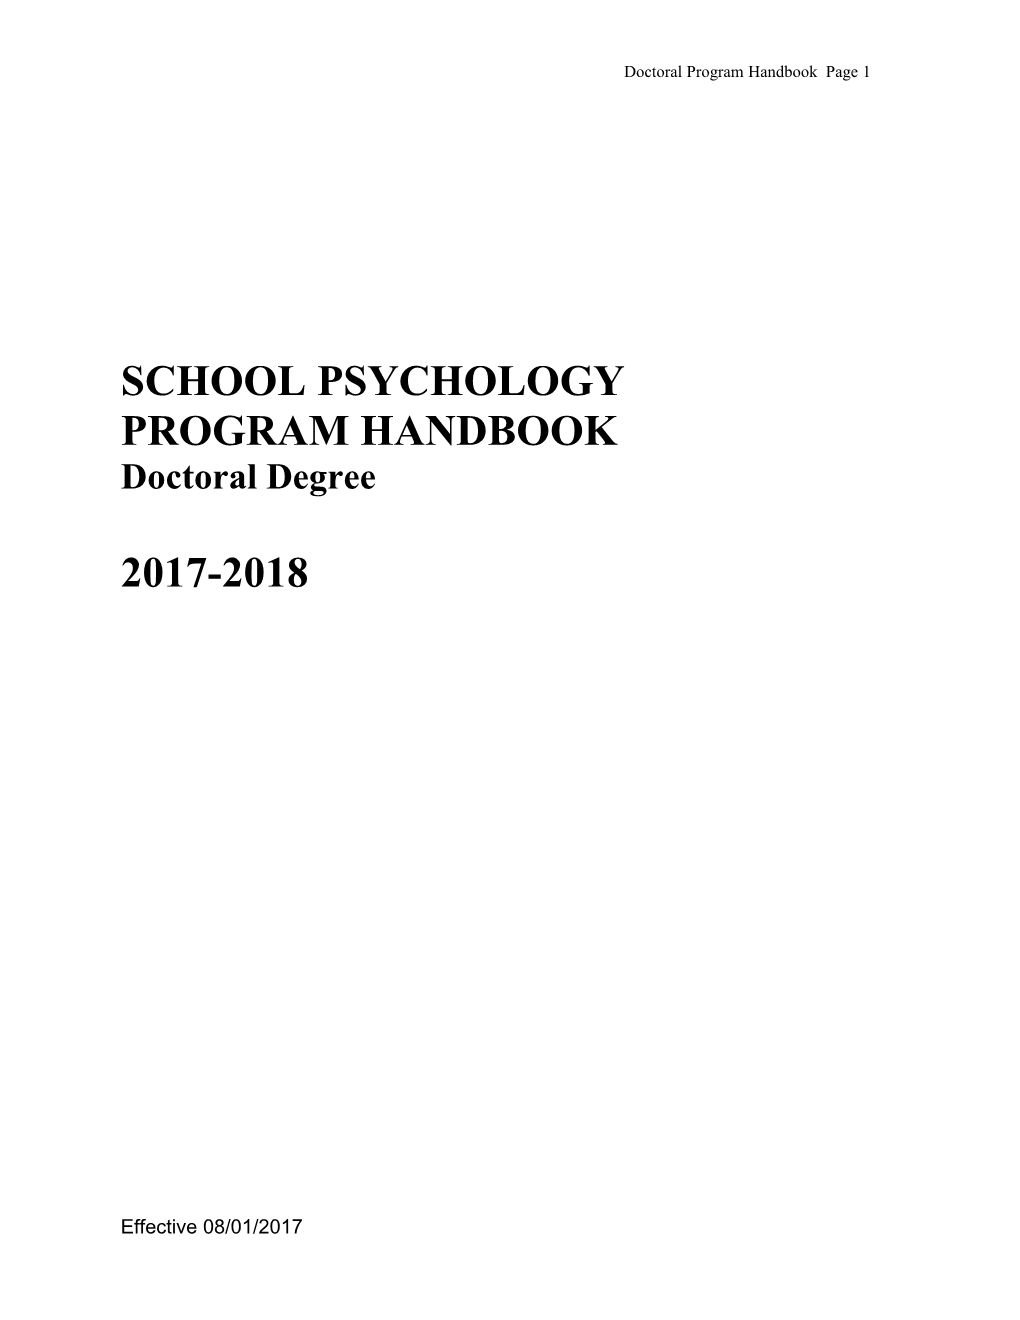 The School Psychology Program